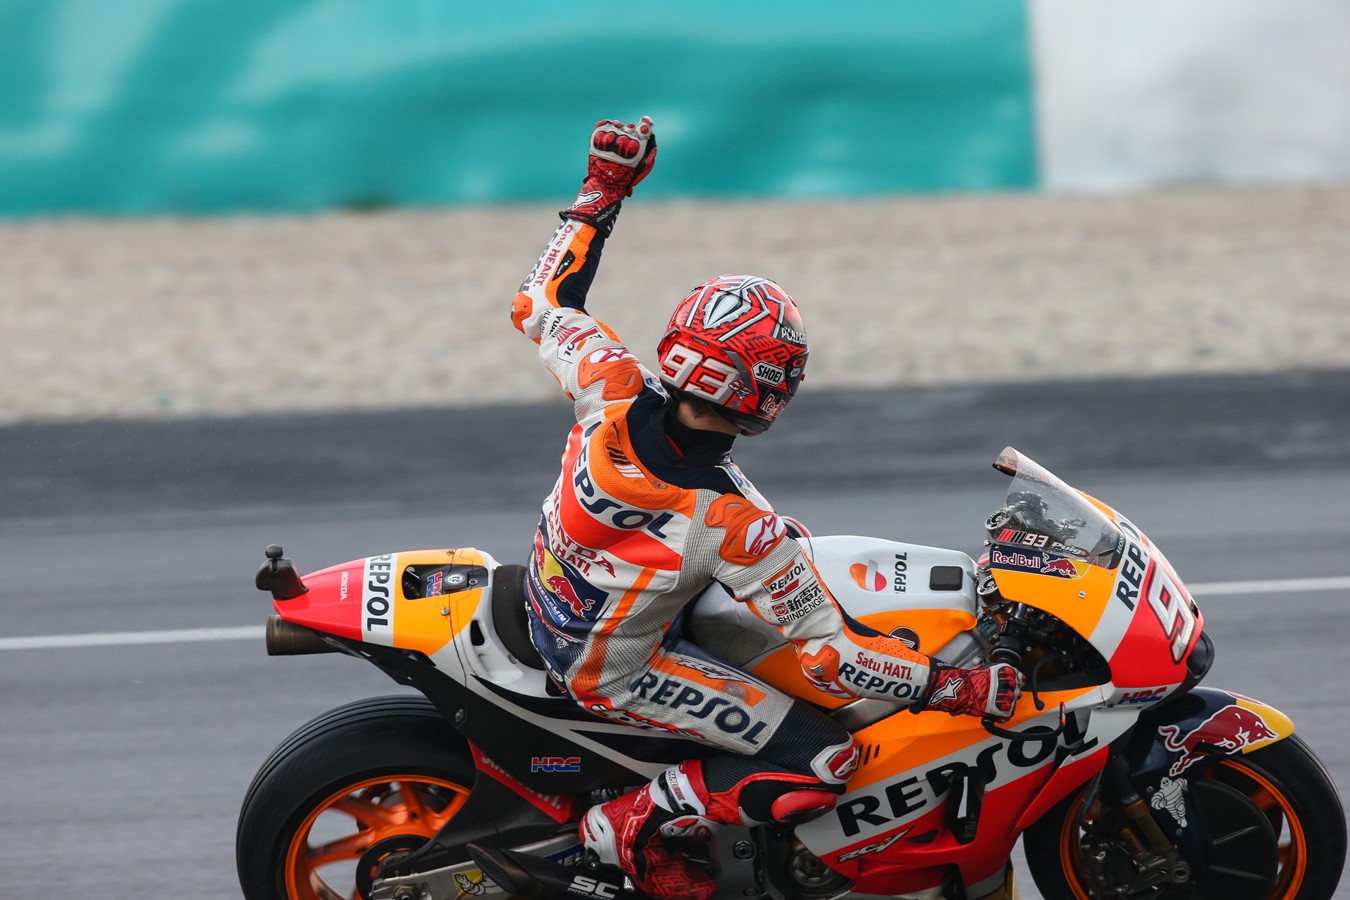 Marquez Fourth As Honda Takes 2017 MotoGP Constructors Crown